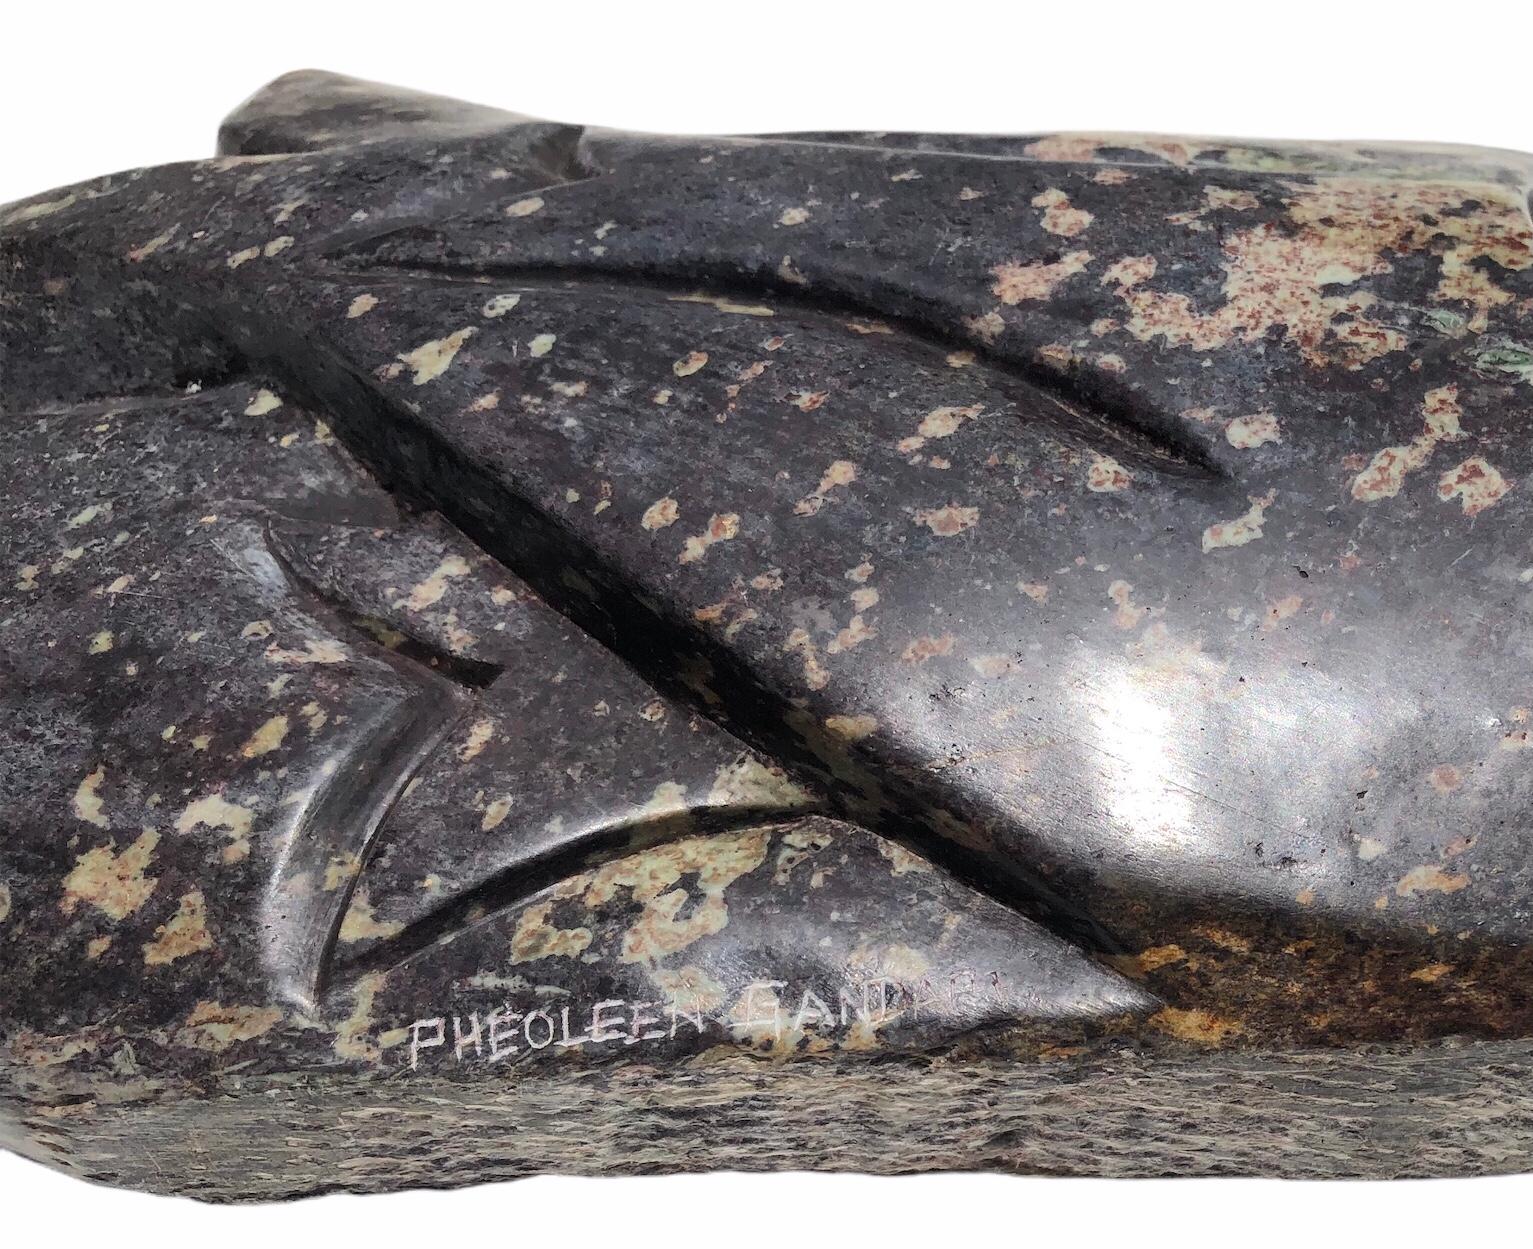 Zimbabwean Pheoleen Gandari Hand-Carved Shona Stone Fish Sculpture